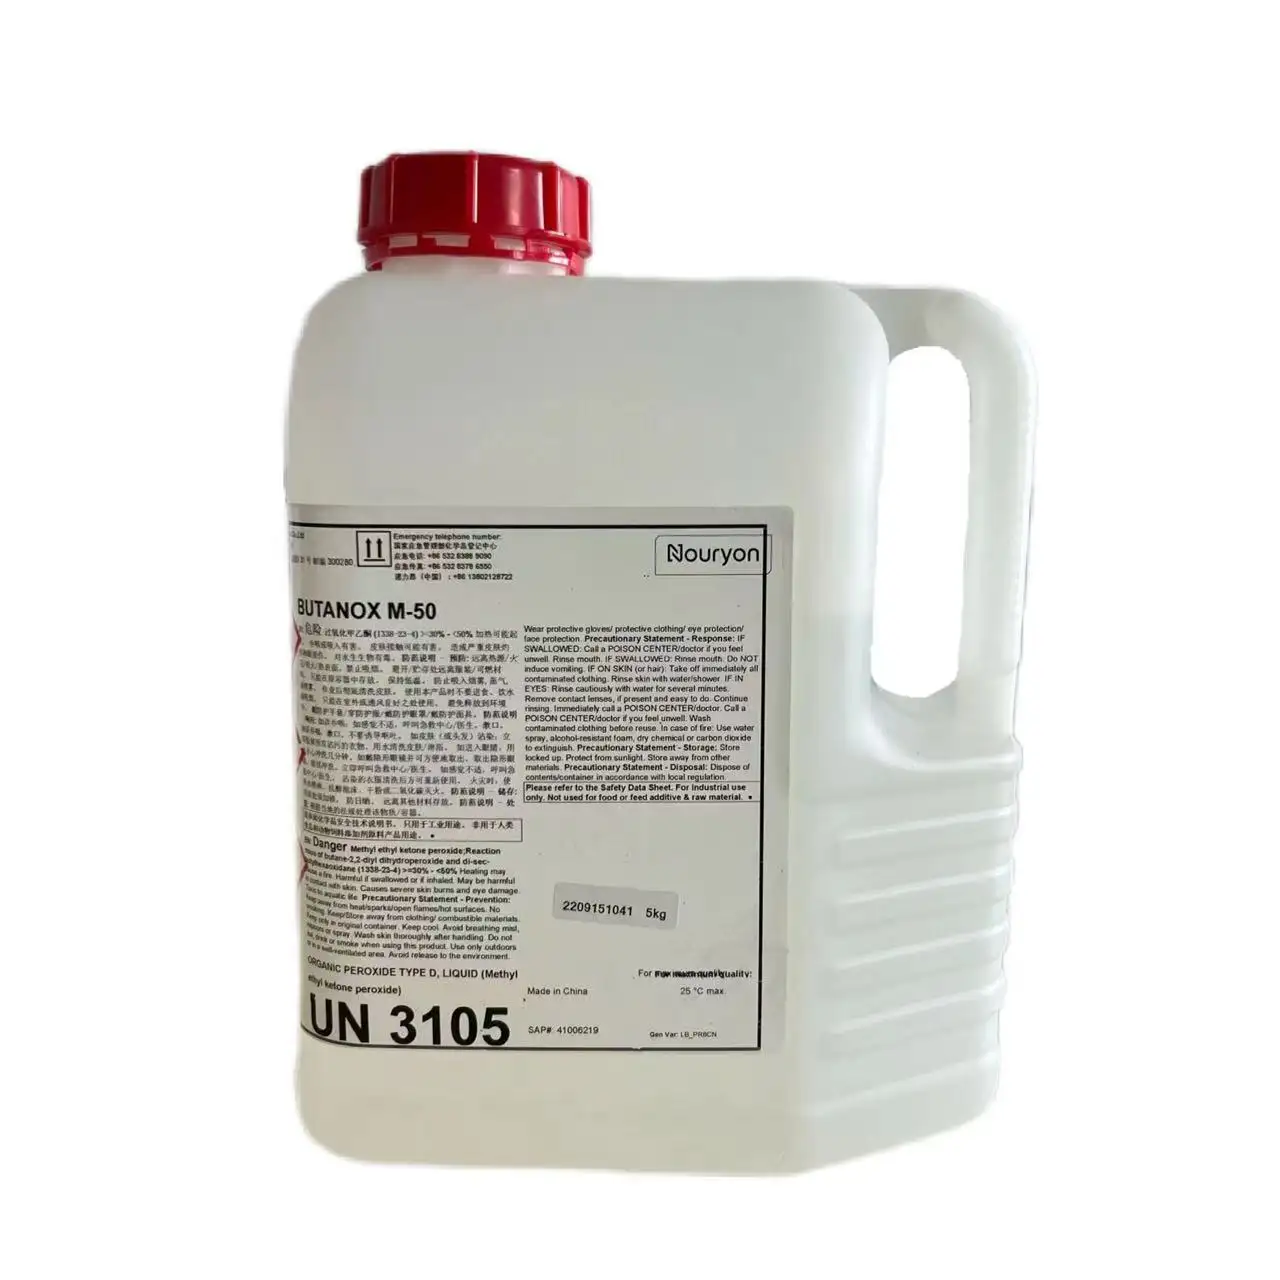 Butanox M-50 MEKP clear liquid hardener curing agent for resin